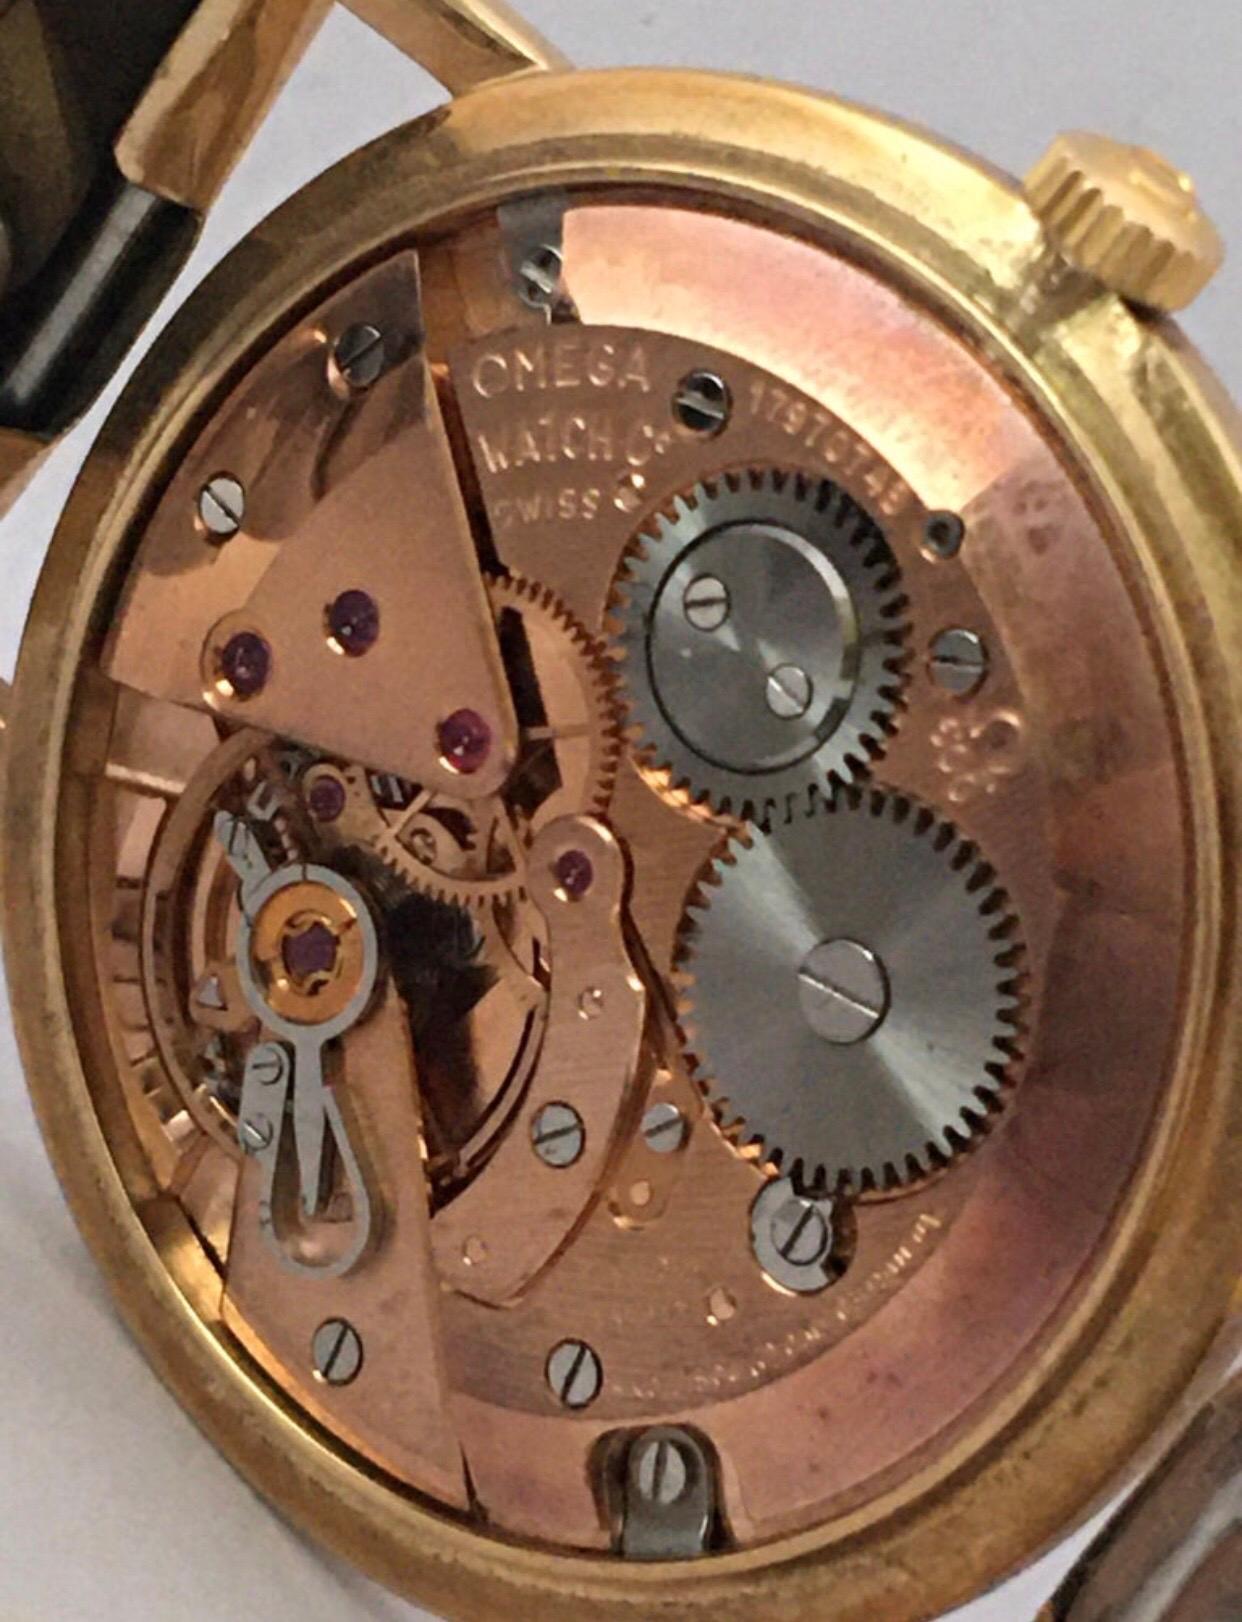 9 Karat Gold and Rolled Gold Bracelet 1960s Omega Mechanical Watch For Sale 3